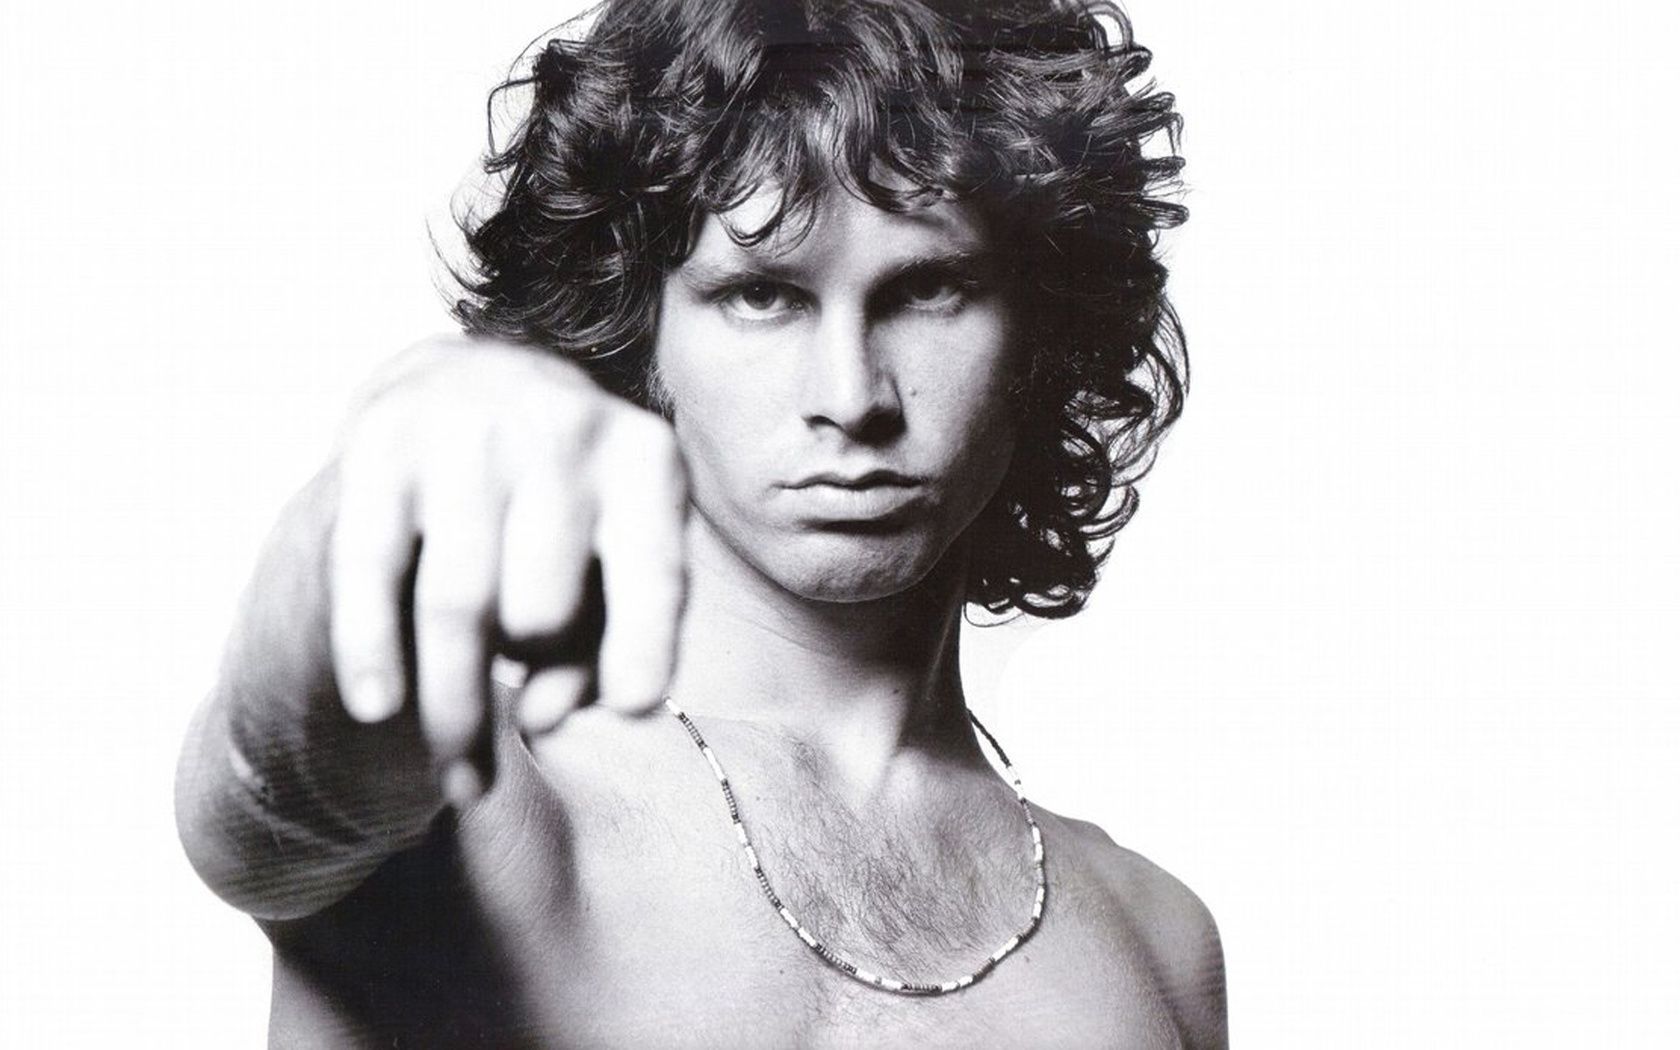 Jim Morrison - The Doors Wallpaper 29018219 - Fanpop